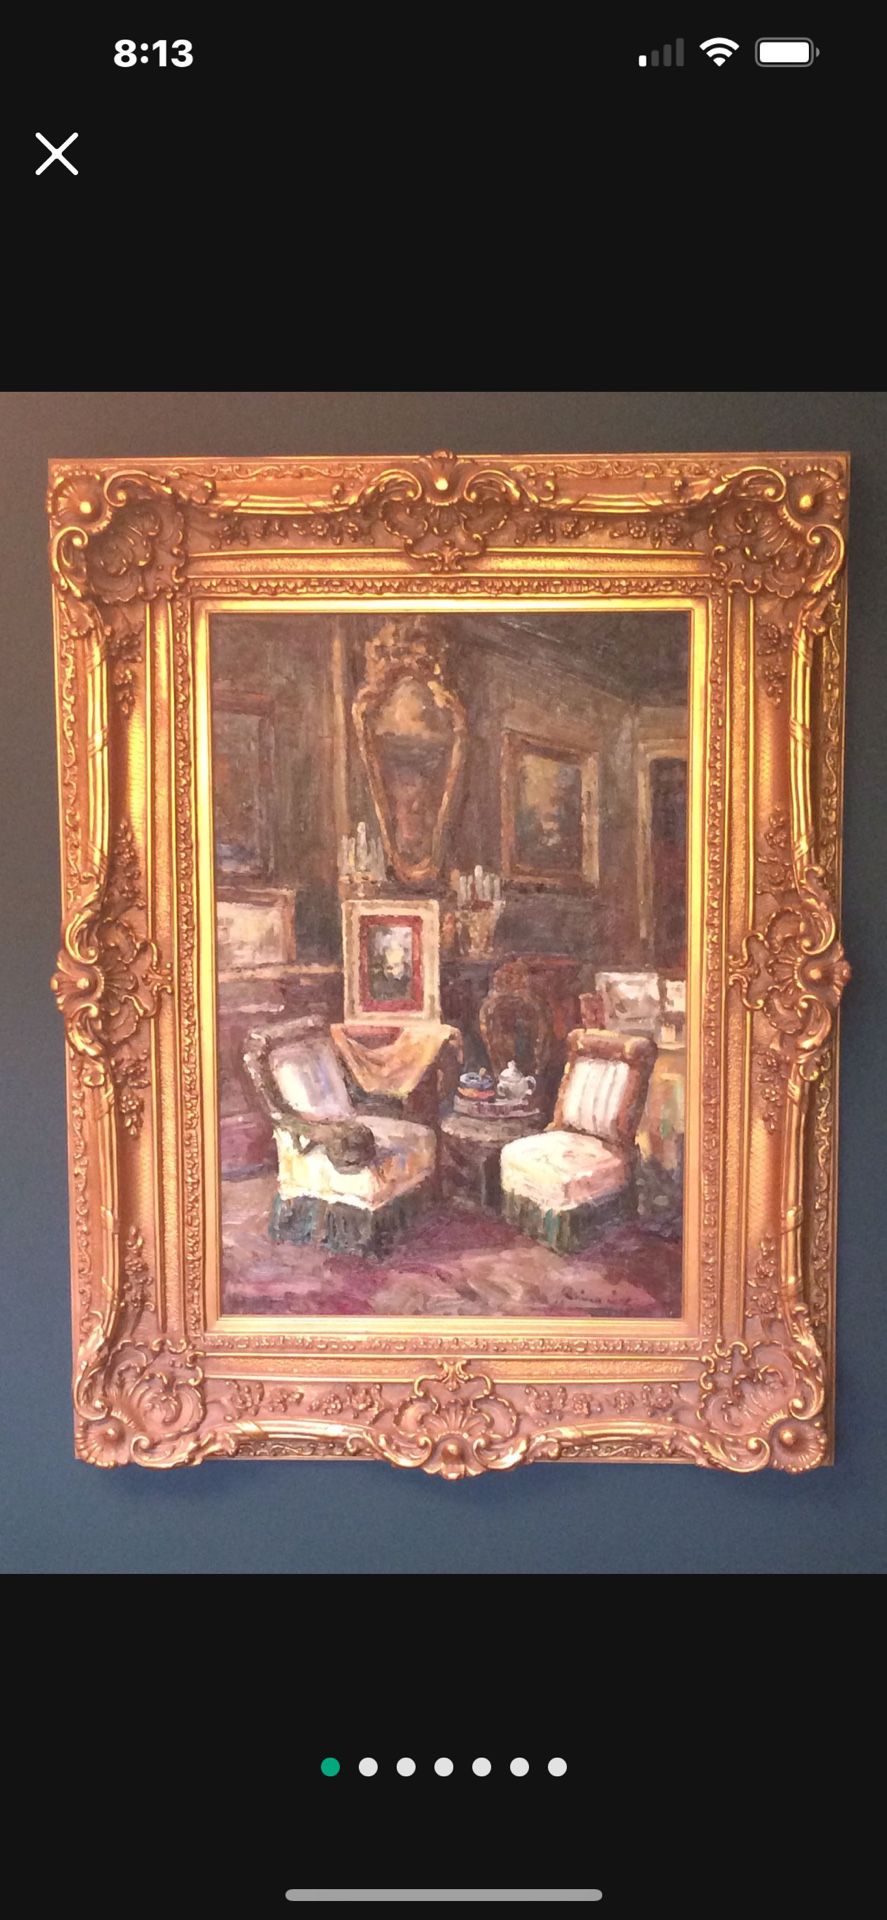 Genuine Oil Painting in Ornate Frame